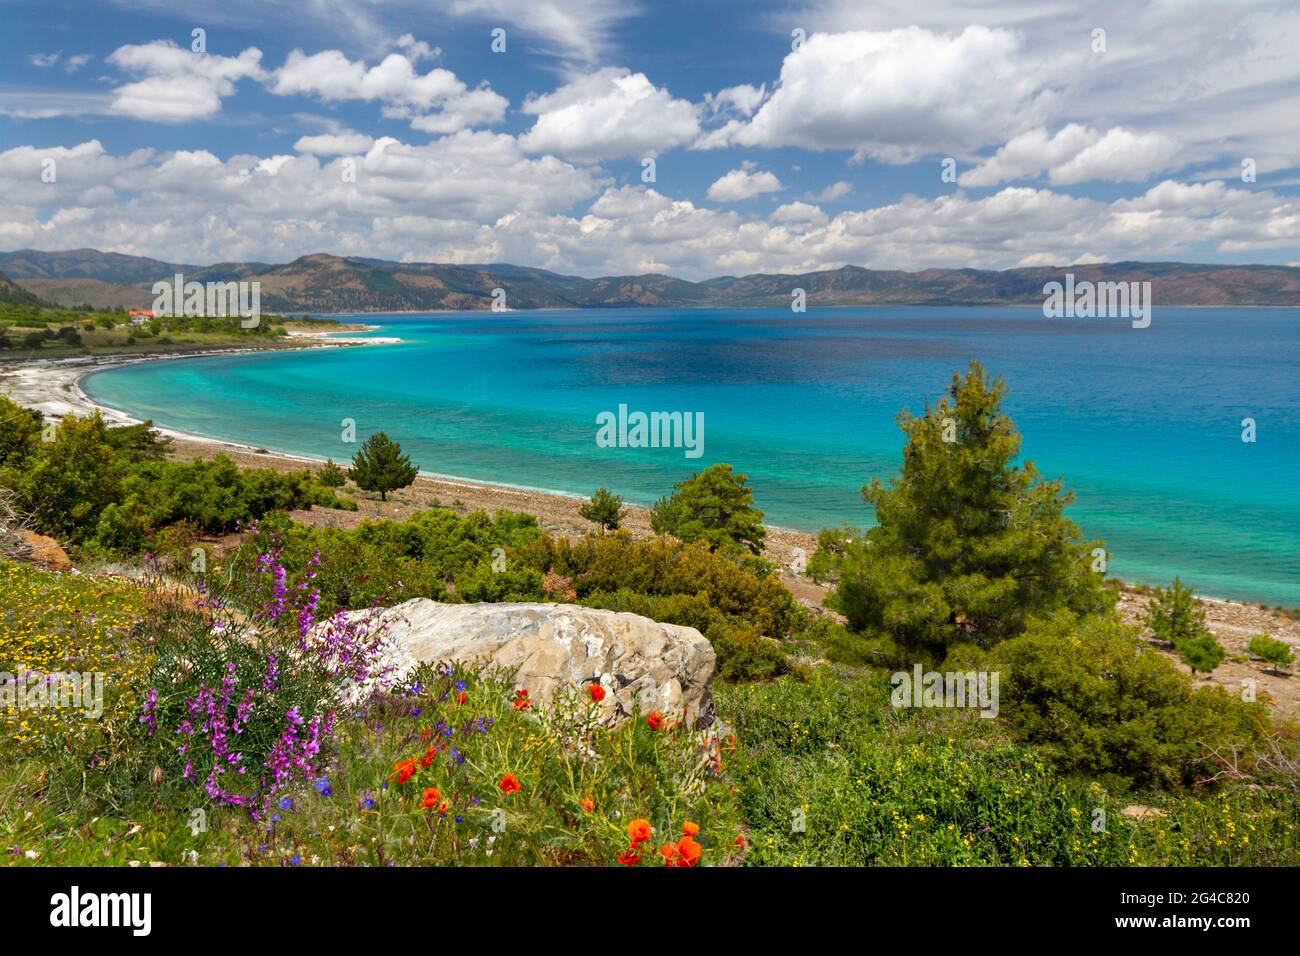 View over the Salda Lake in Turkey. Stock Photo